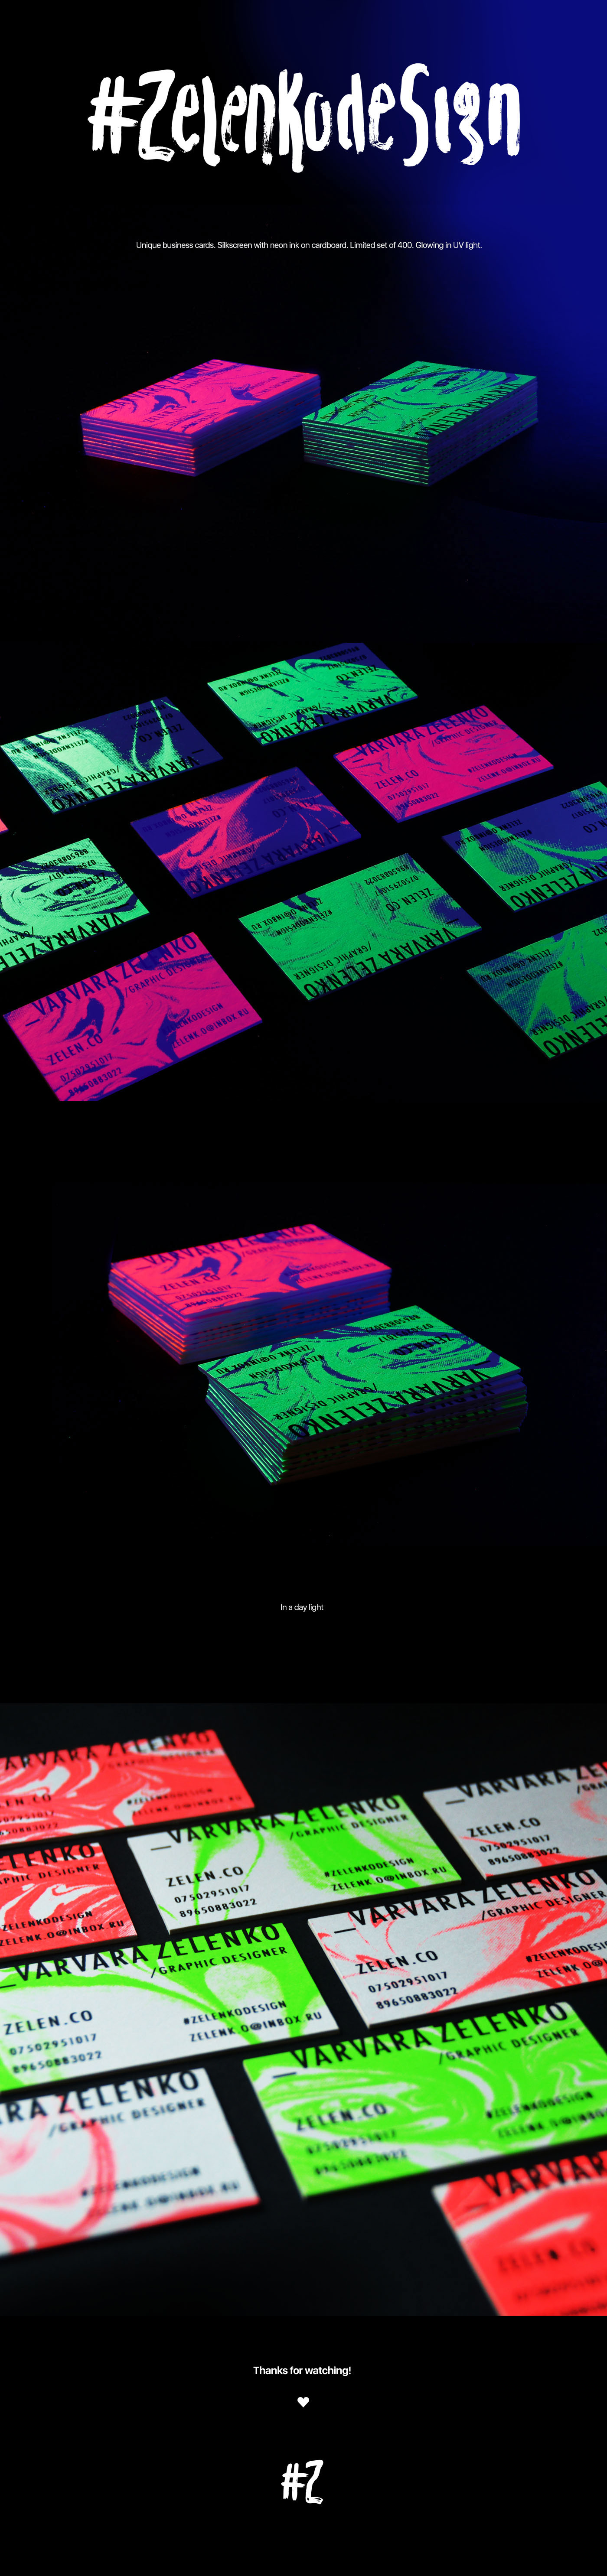 business card neon glow green pink zelenkodesign silkscreen brand printmaking шелкография визитка uv light неон